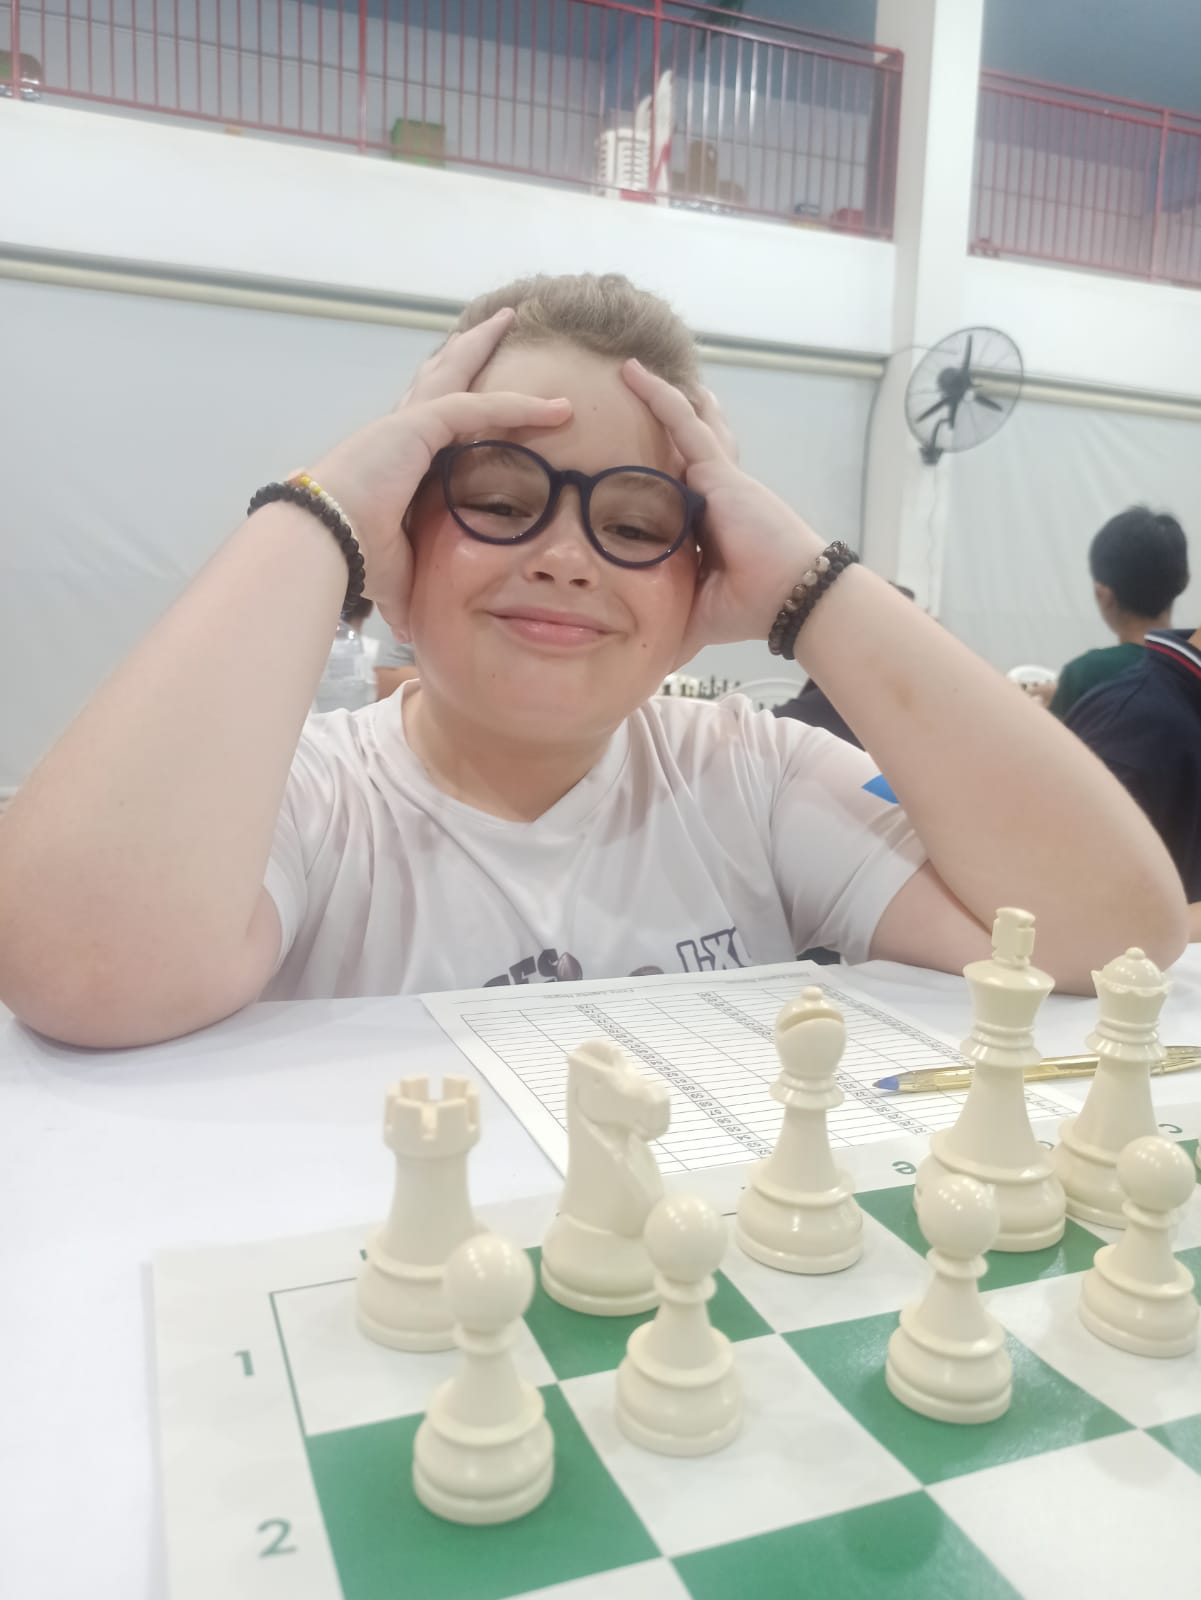 Xadrez lageano disputa torneio internacional na capital – Notícia